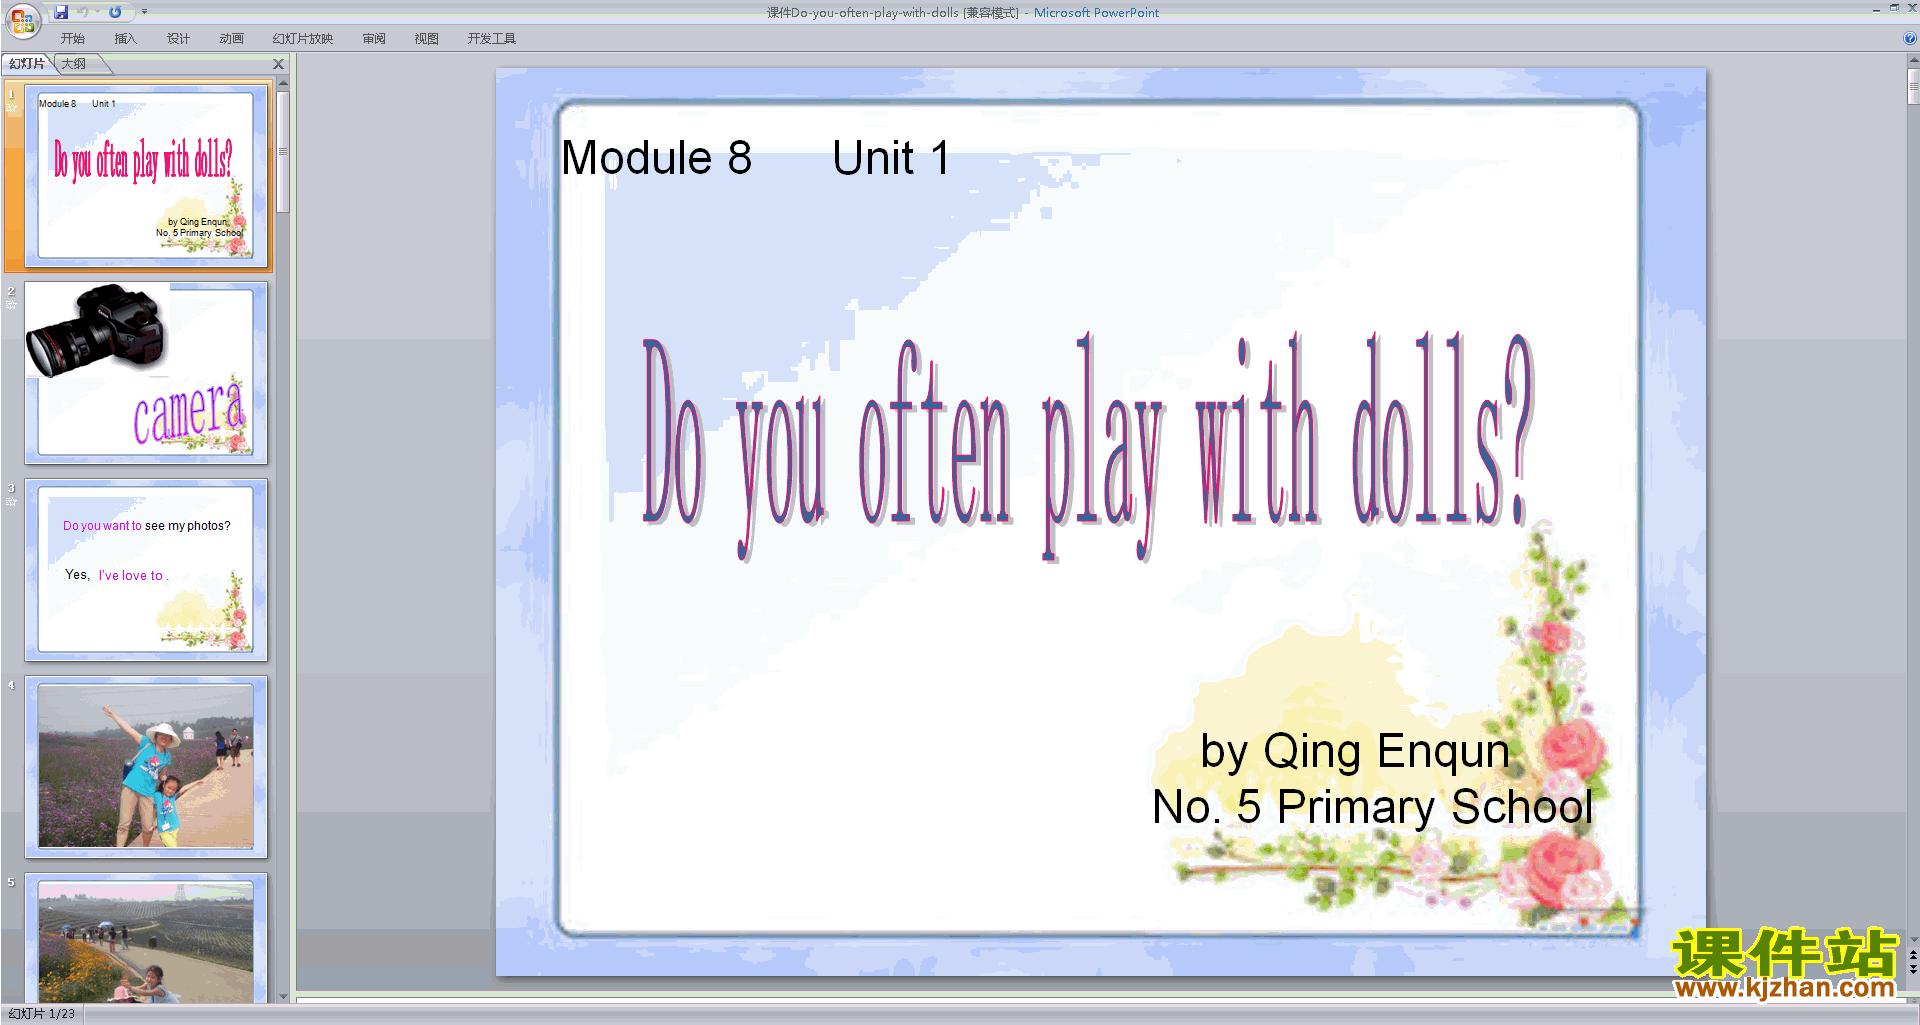 Module8 Unit1 Do you often play with dollspptμ10